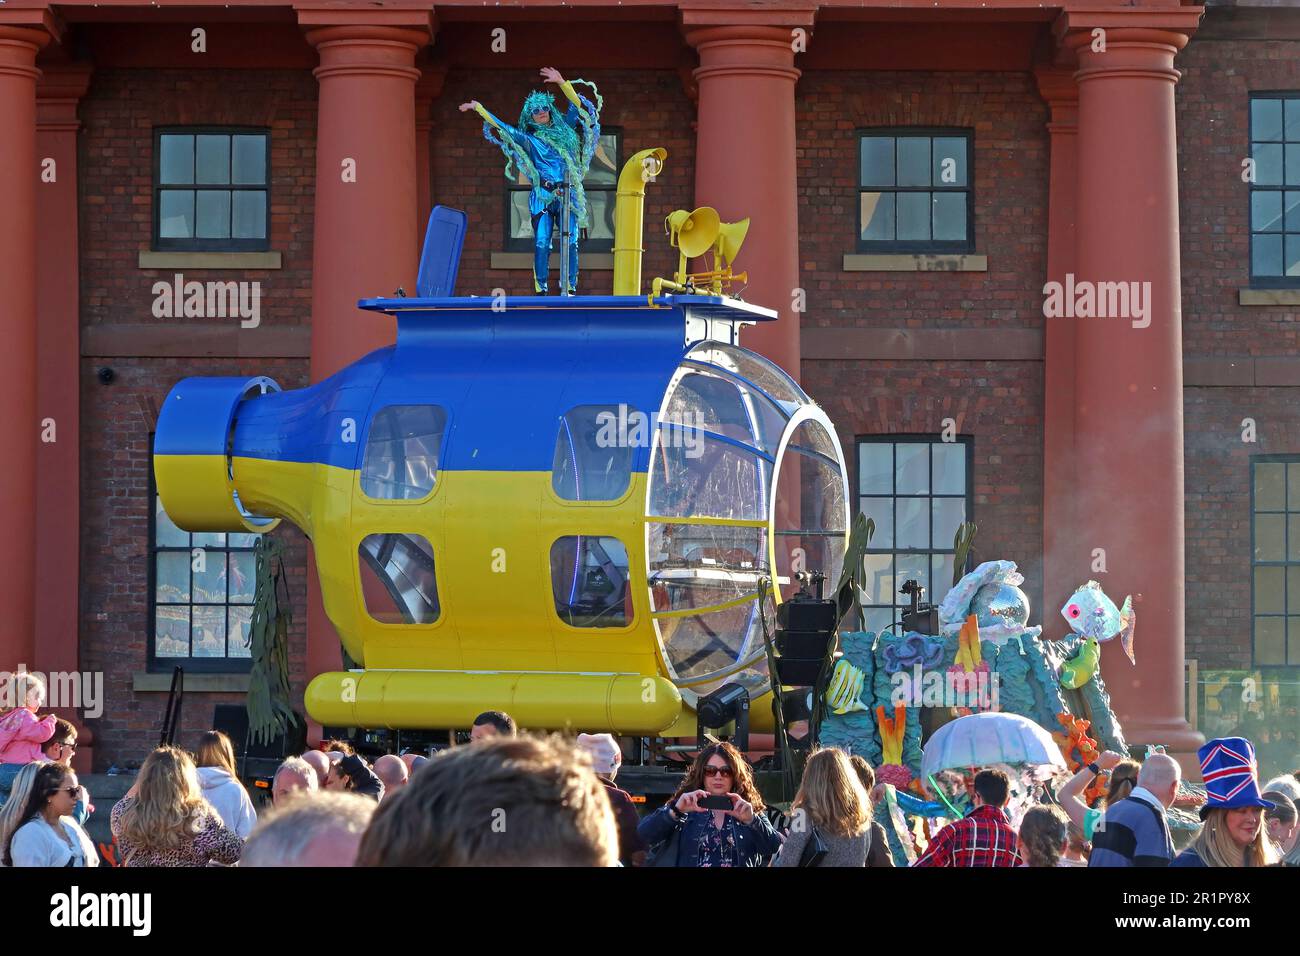 Beatles style yellow and blue , Ukraine flag coloured submarine DJ and dancer, Royal Albert Dock, Pier Head, Liverpool, Merseyside, England, UK,L3 4AF Stock Photo